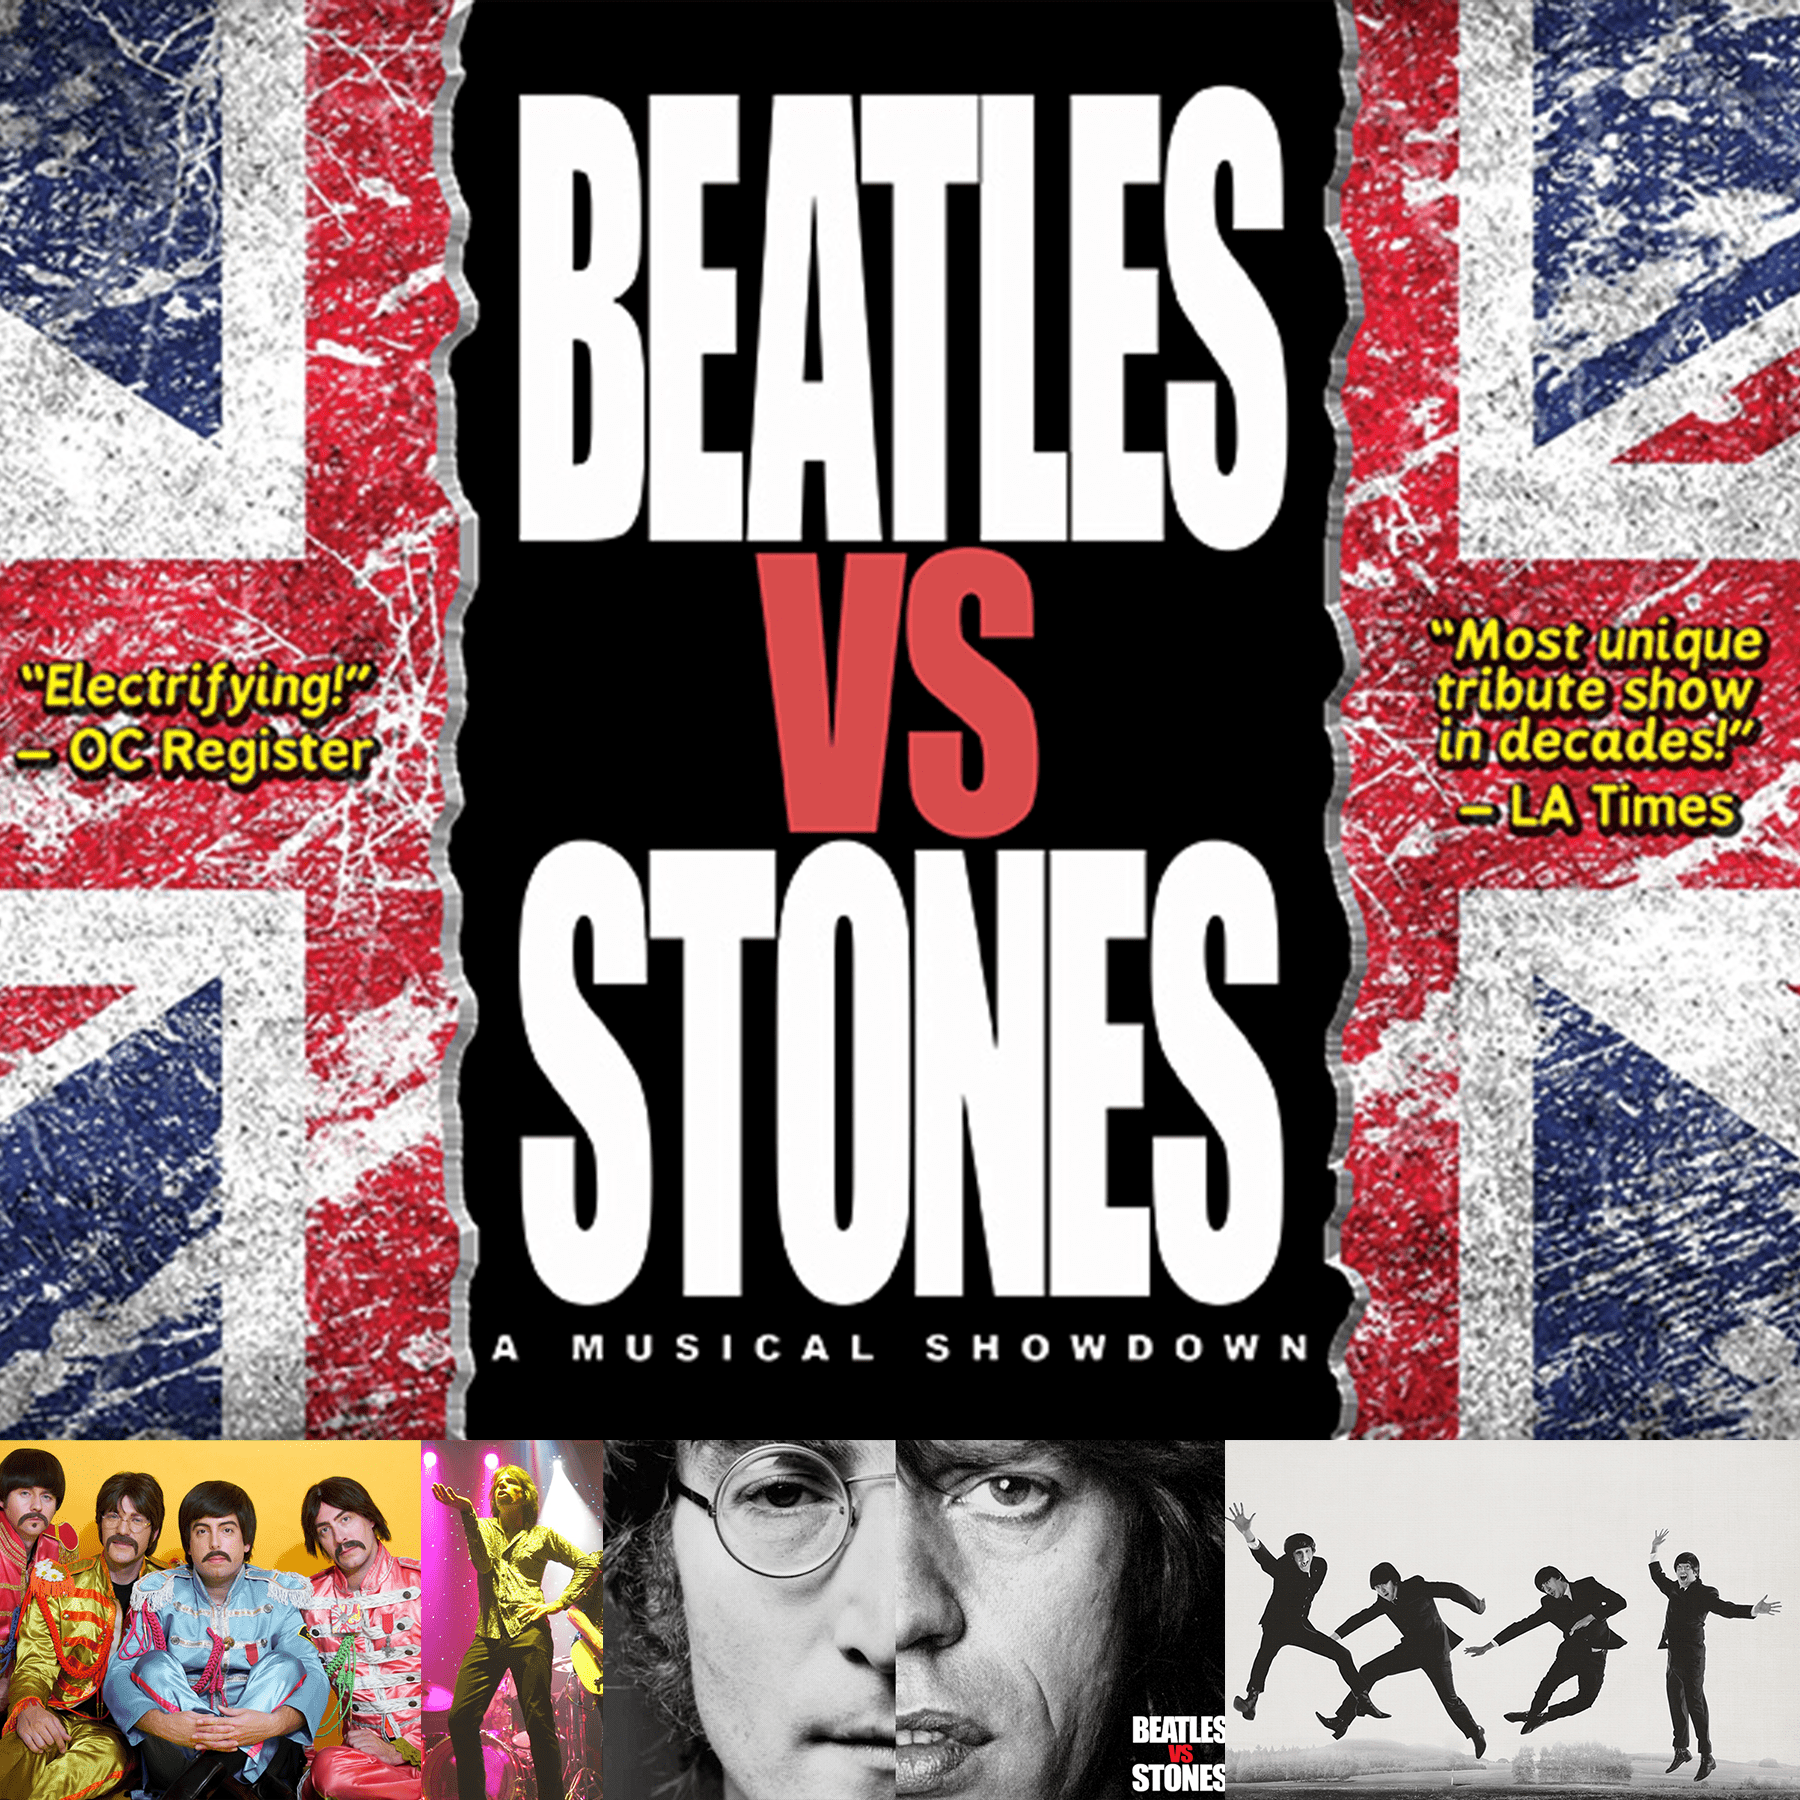 Beatles Vs. Stones a musical showdown electrifying - OC Register Most unique tribute show in decades! - LA Times